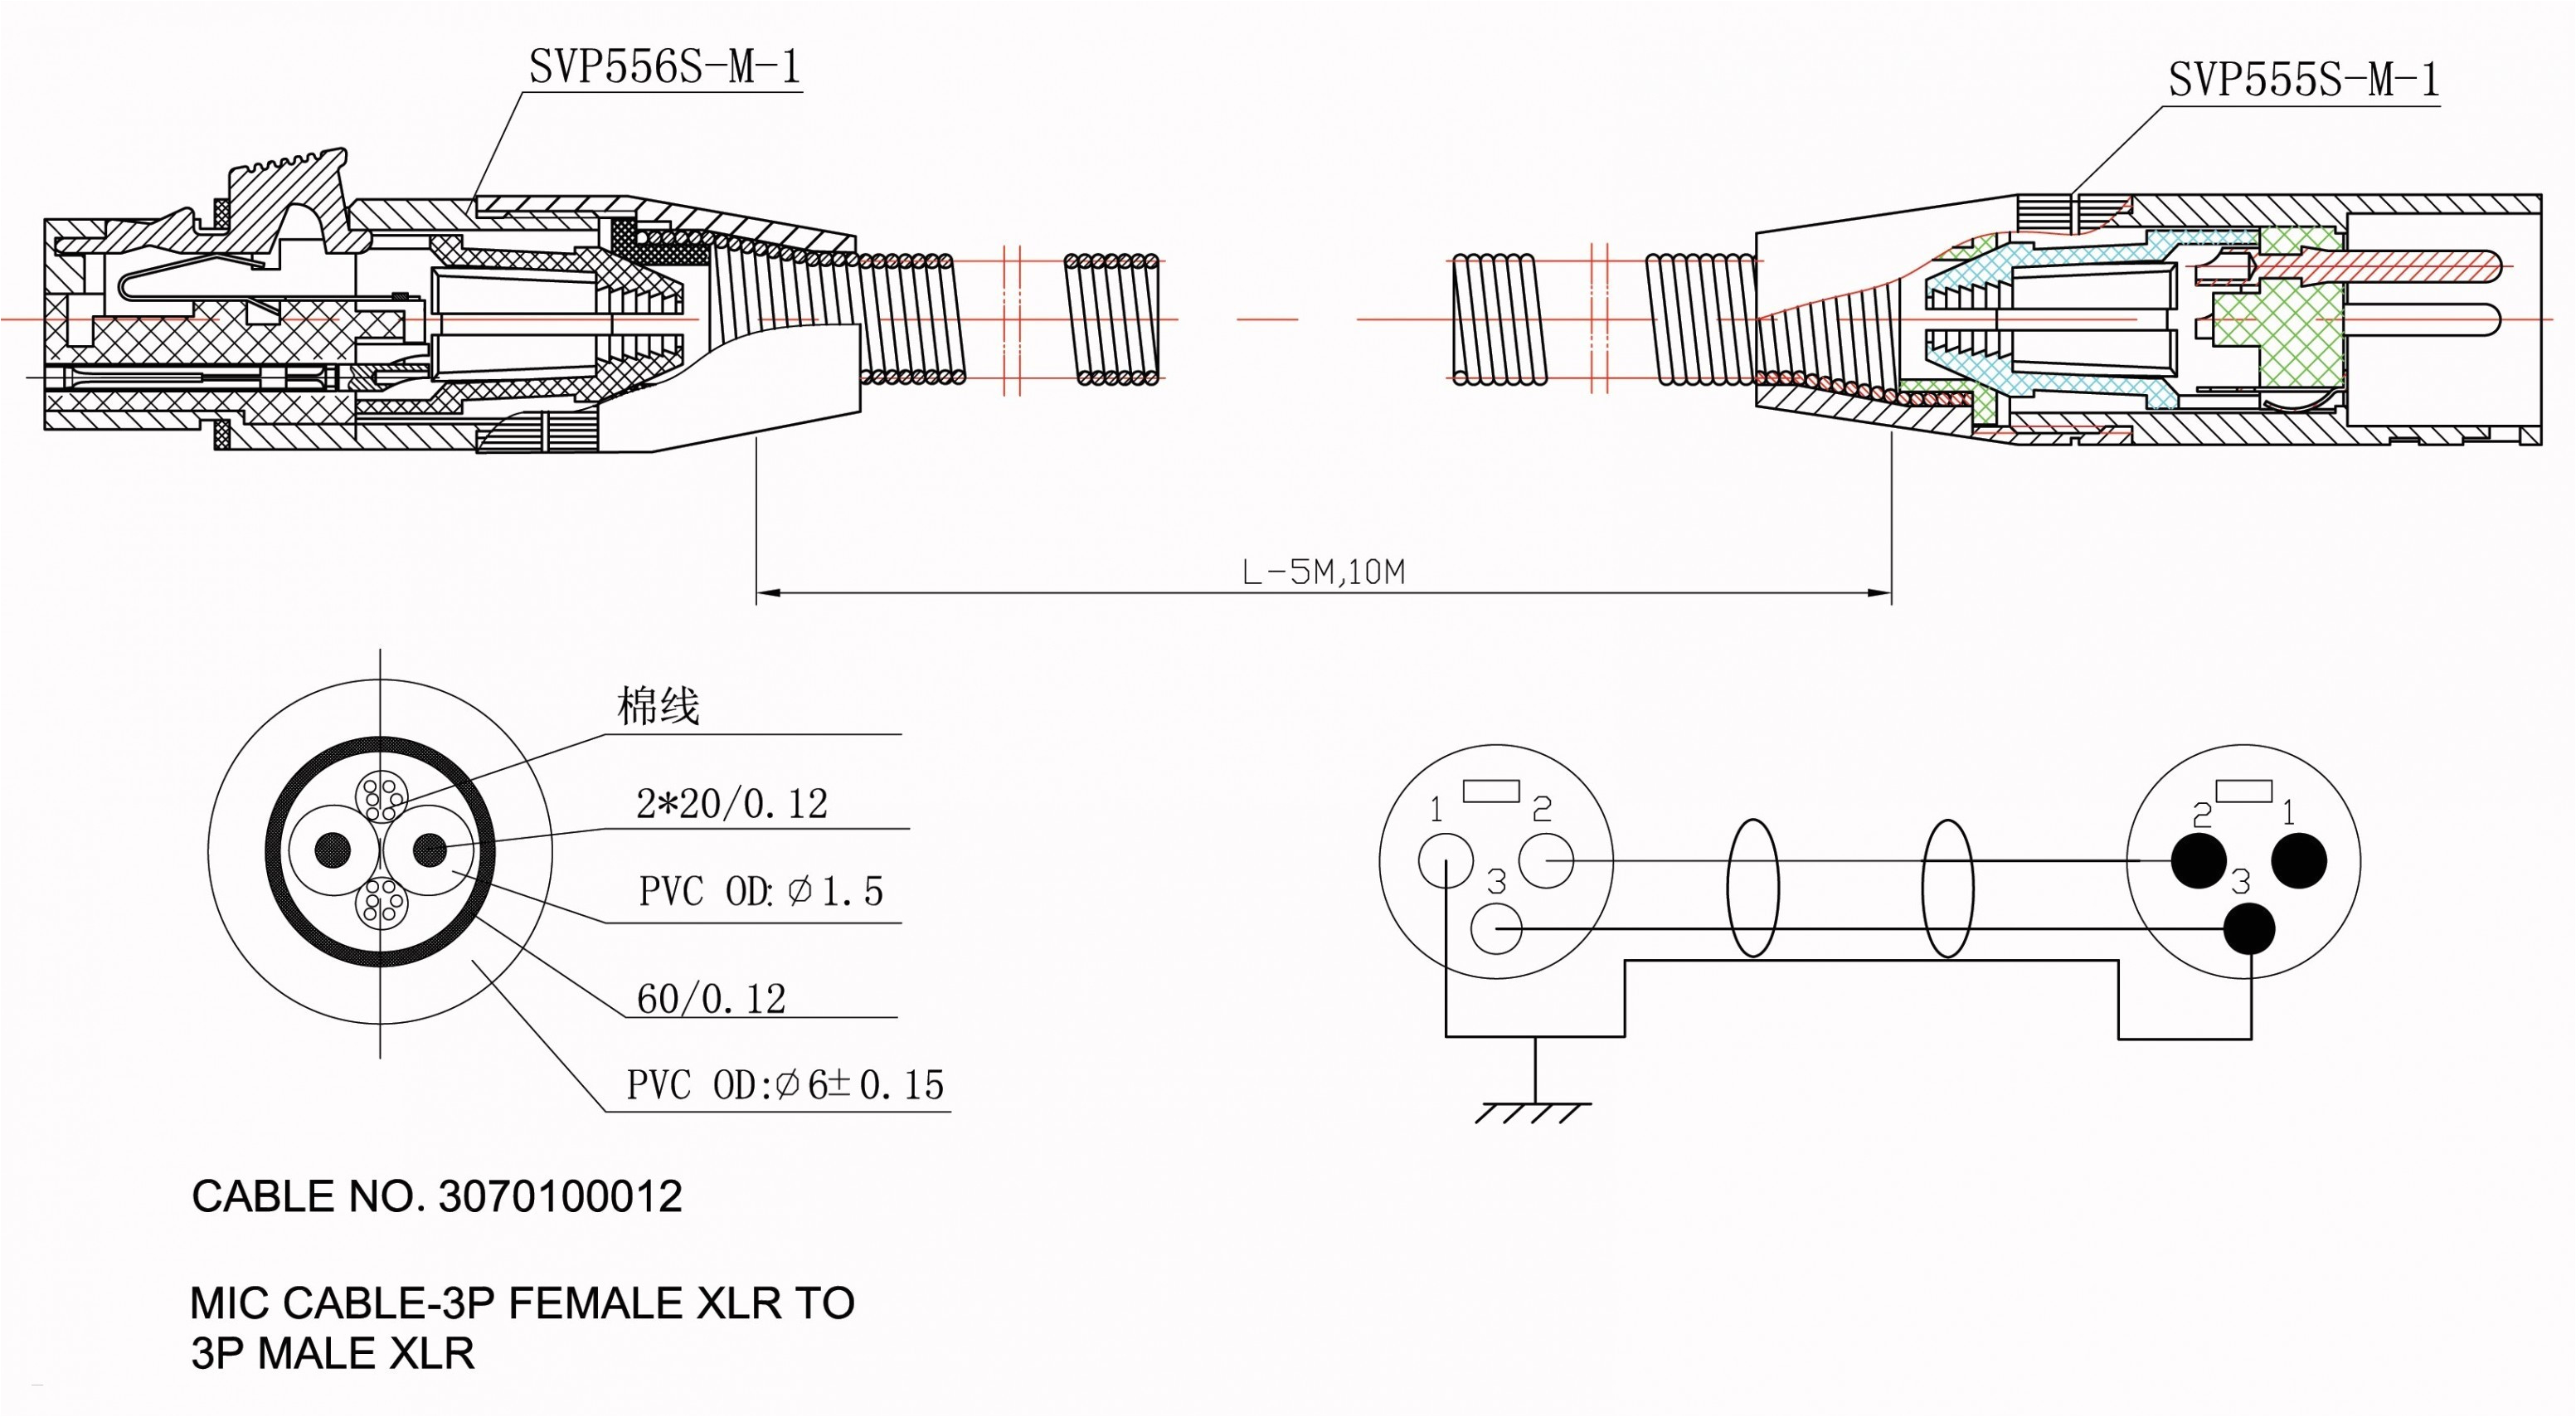 cat5 wire diagram new wiring diagram for cat5 cable patch panelgigabit wiring diagram 17